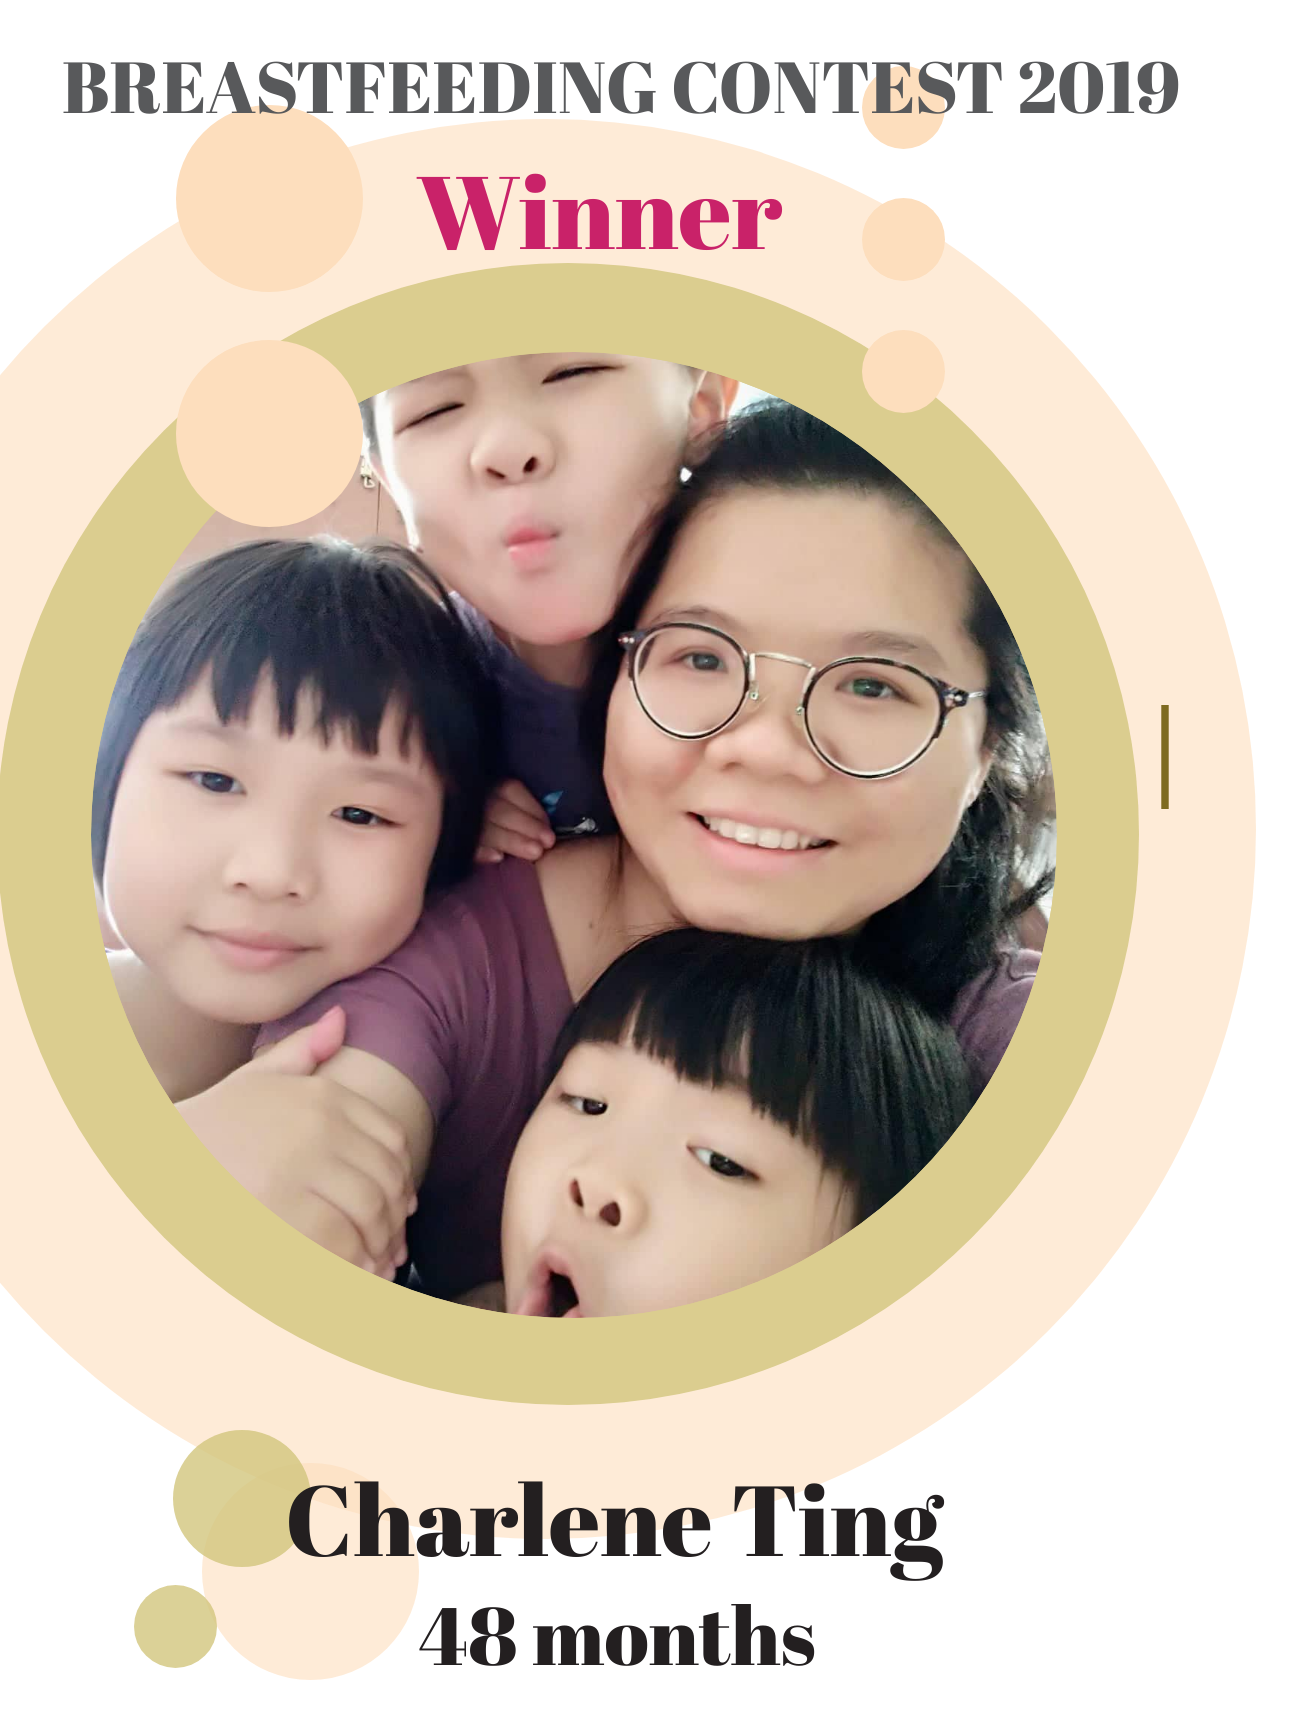 Breastfeeding Contest 2019 - Winner (Charlene Ting)